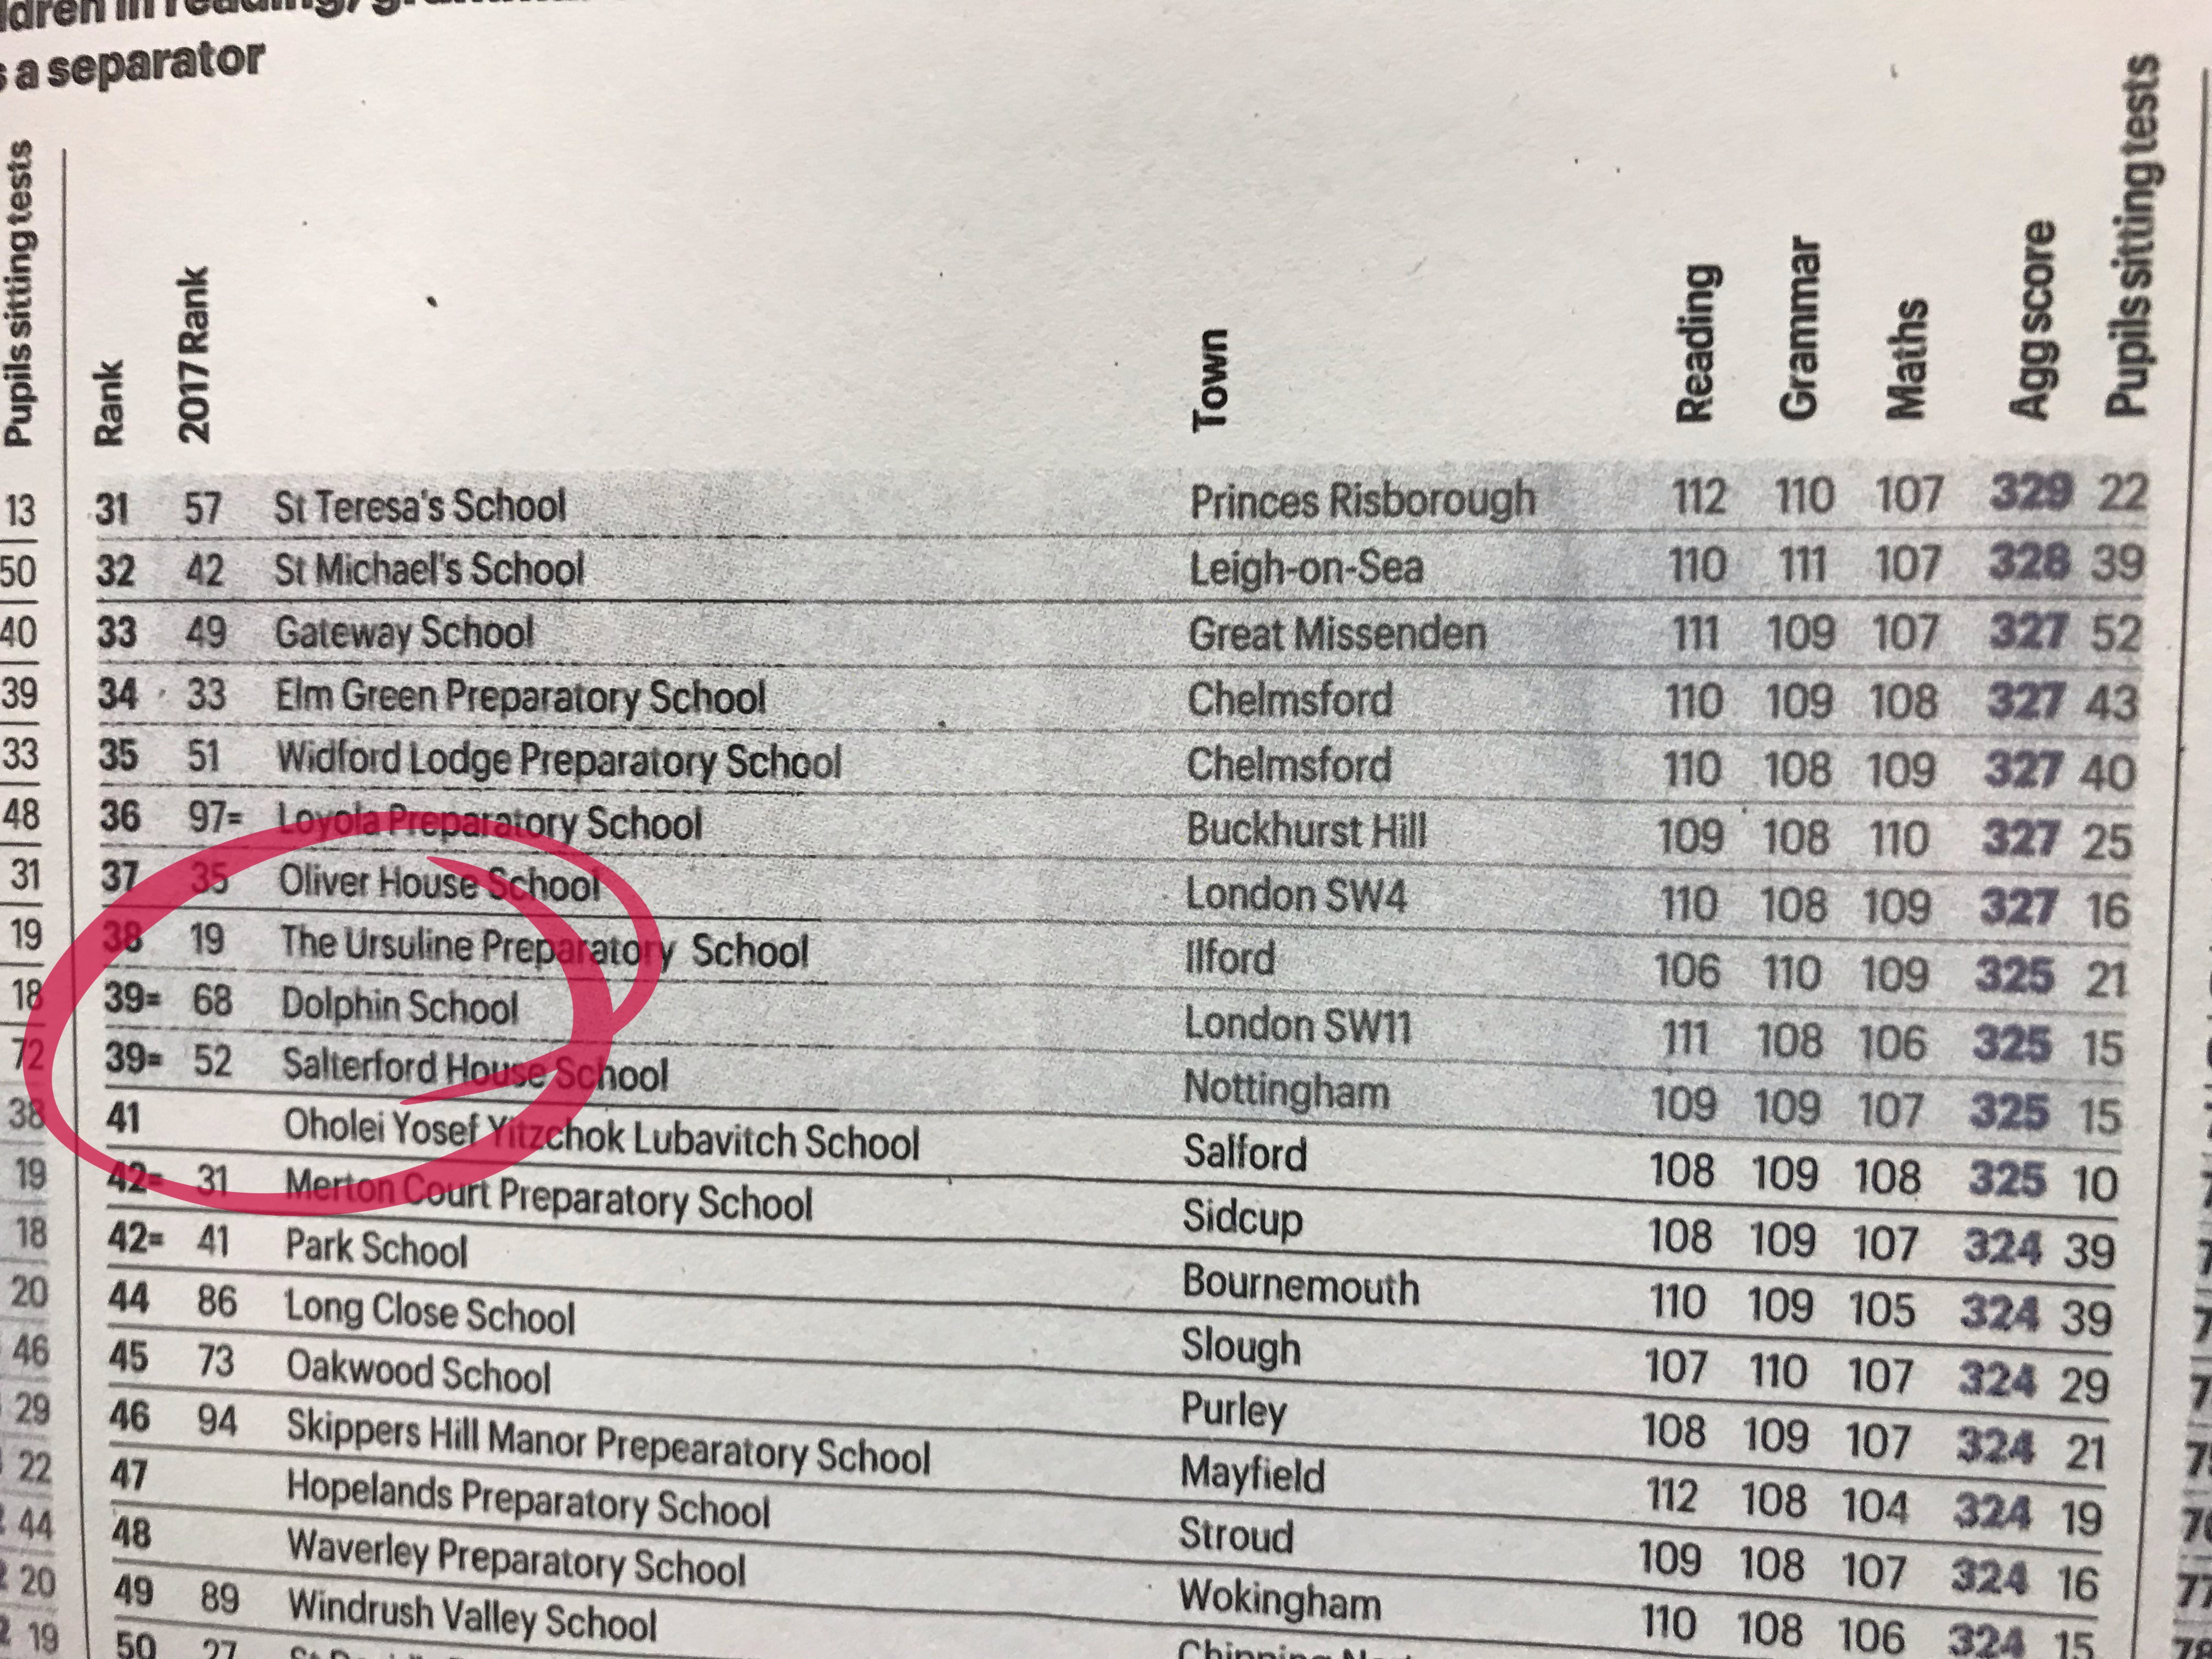 Sunday Times Top 100 Prep Schools